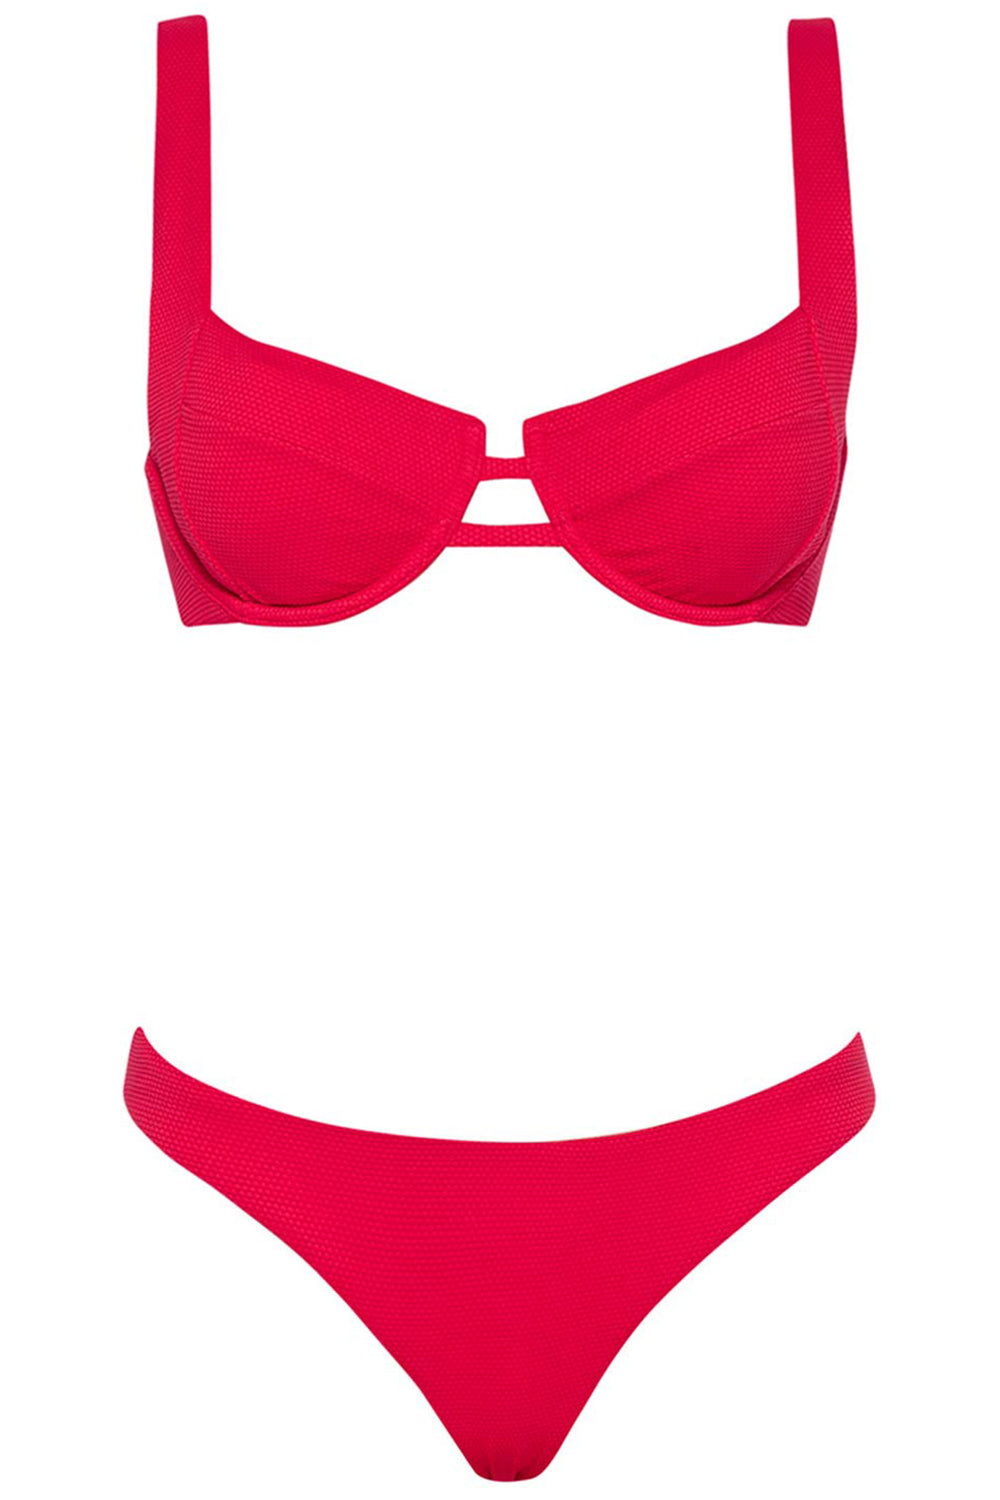 Margarita Bikini Red Set on white background front view.